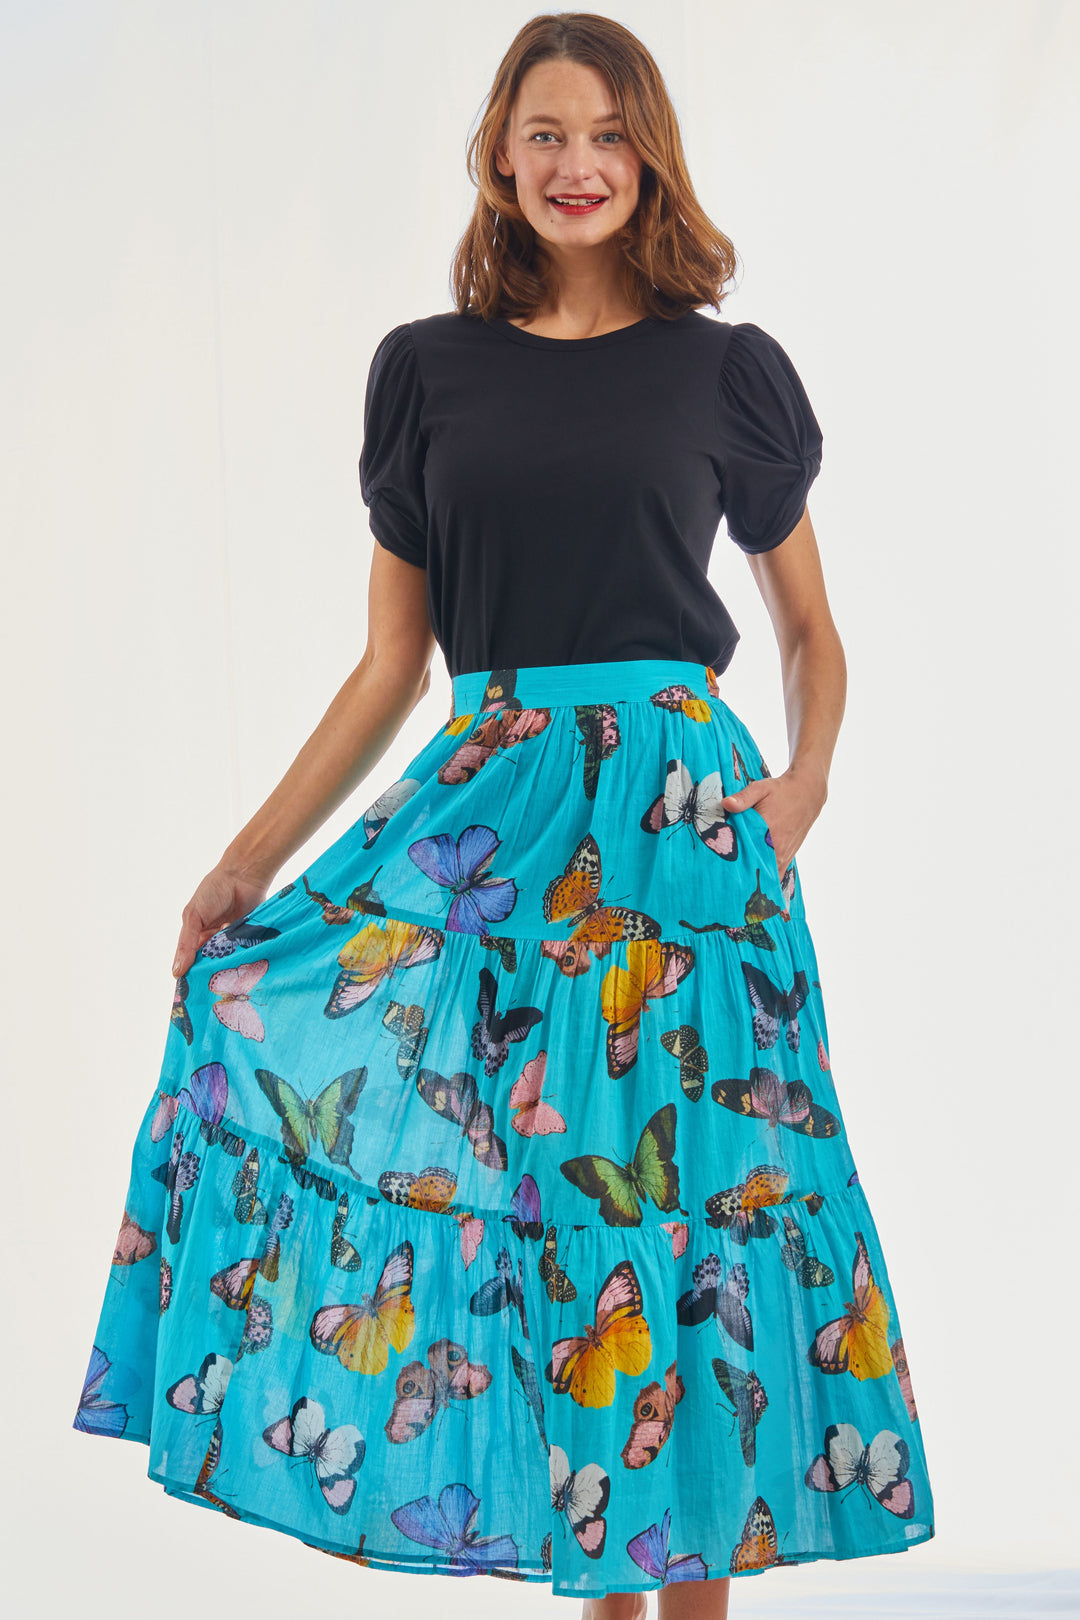 Dizzy-Lizzie Woodstock Pull-On Skirt - Turquoise Butterfly